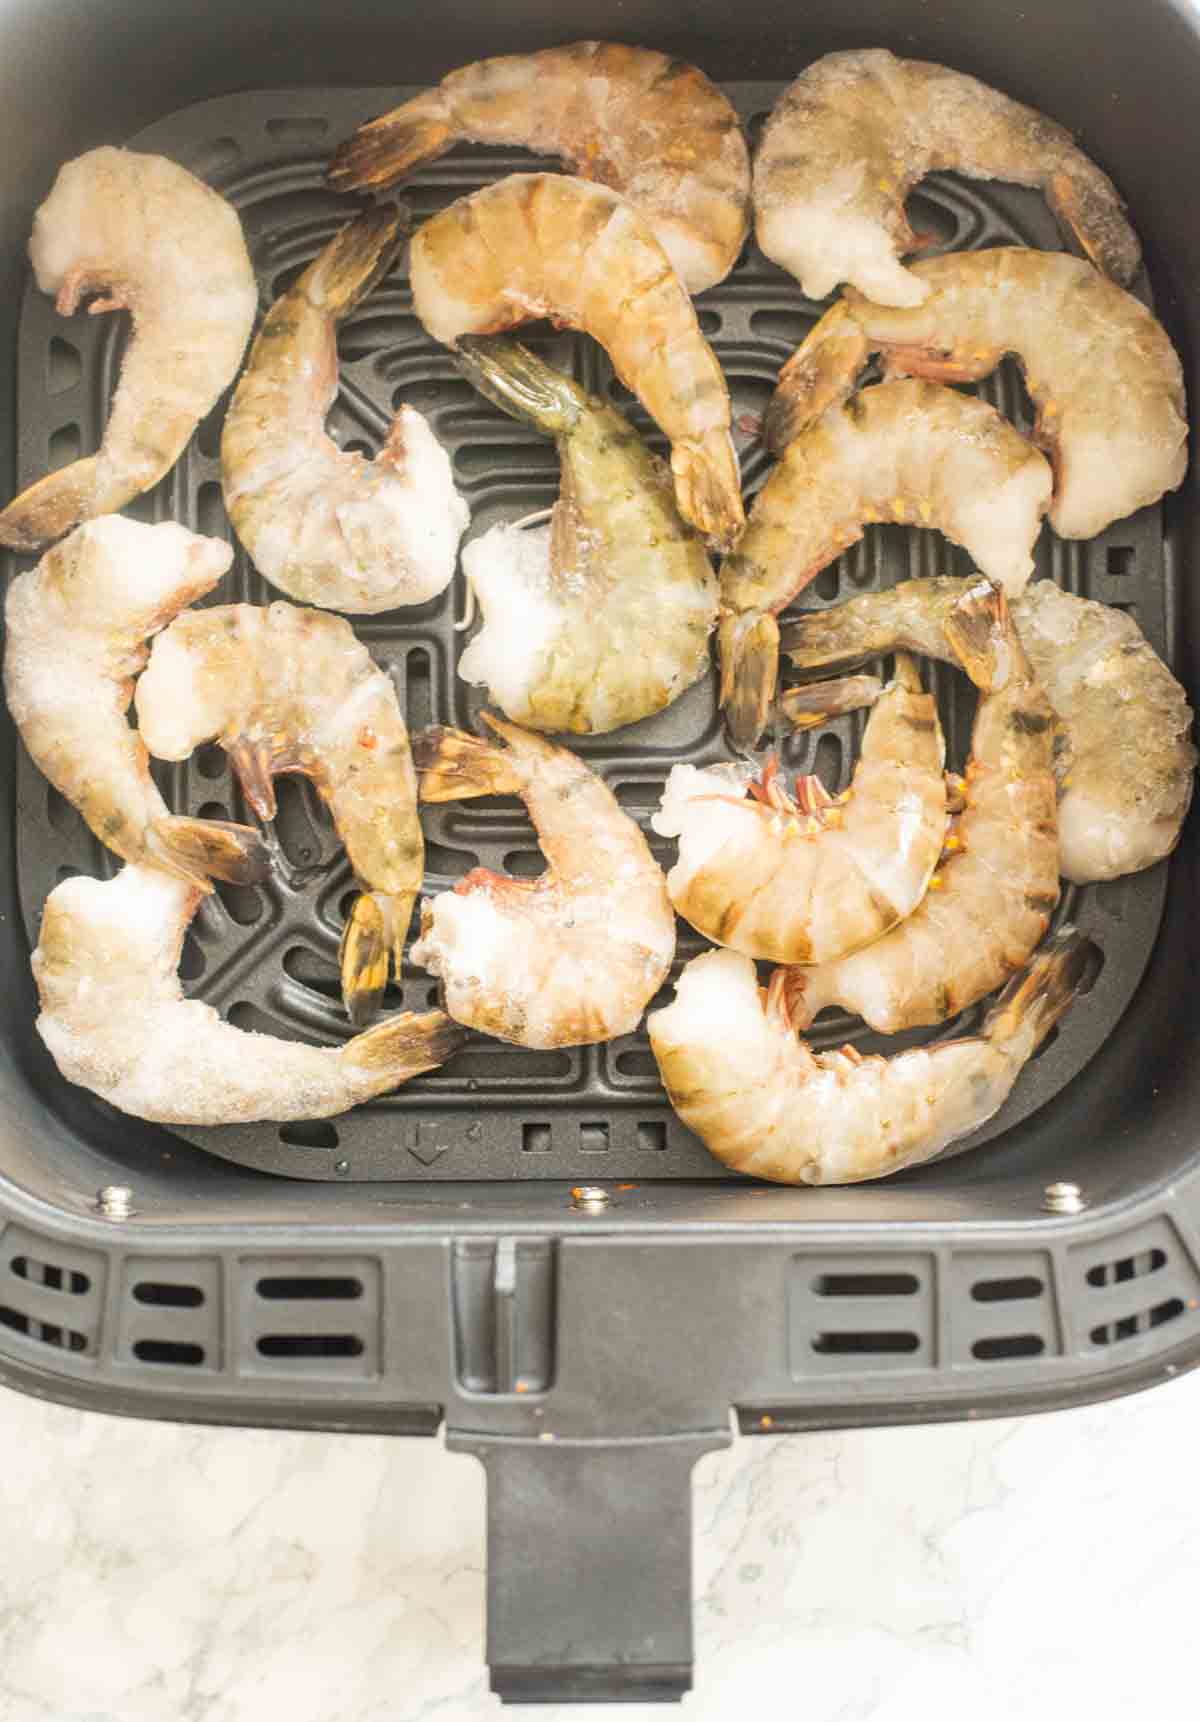 Frozen shrimp in an AIr fryer basket